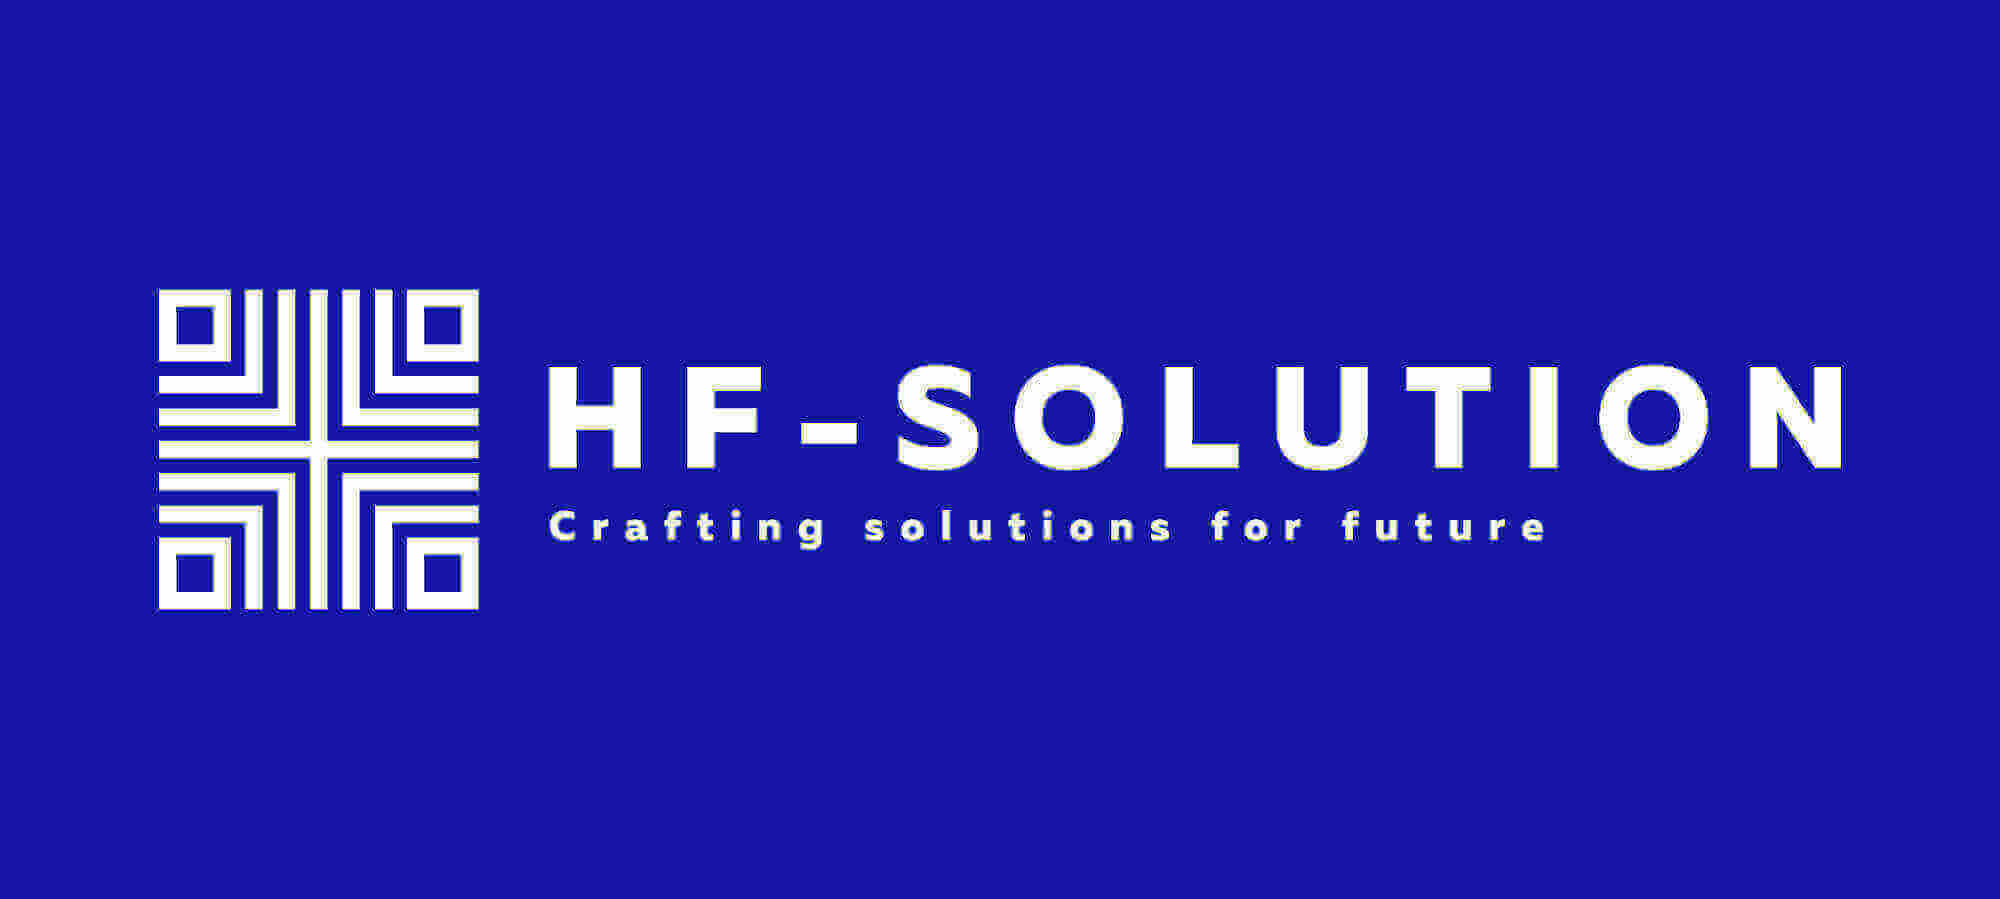 HF-Solution